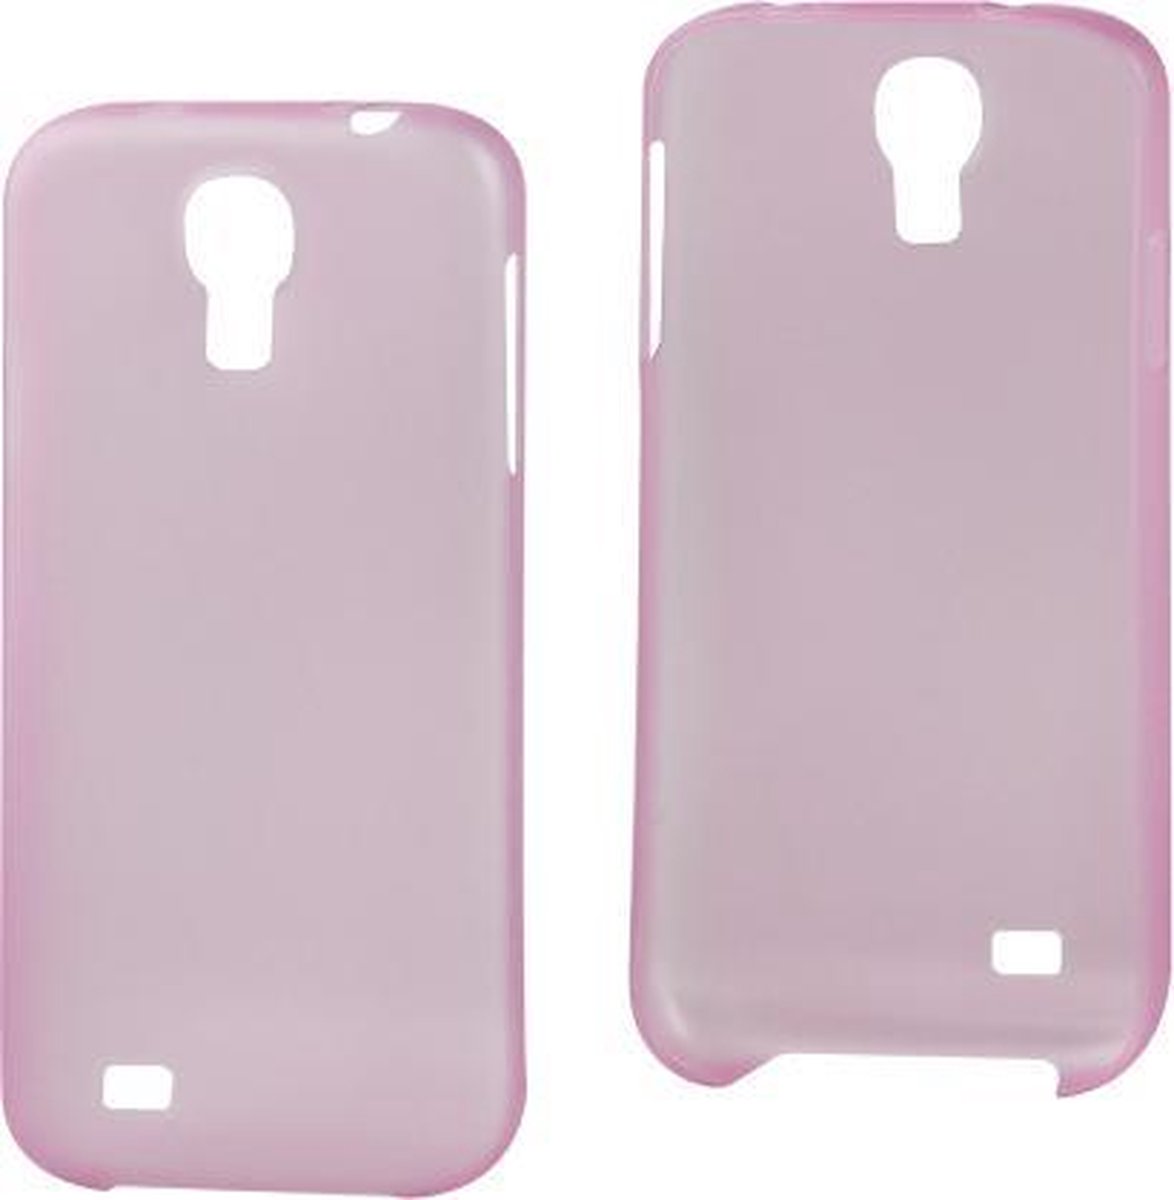 muvit Samsung Galaxy S4 Ultra Thin iMatt Semi-Hard Case Pink